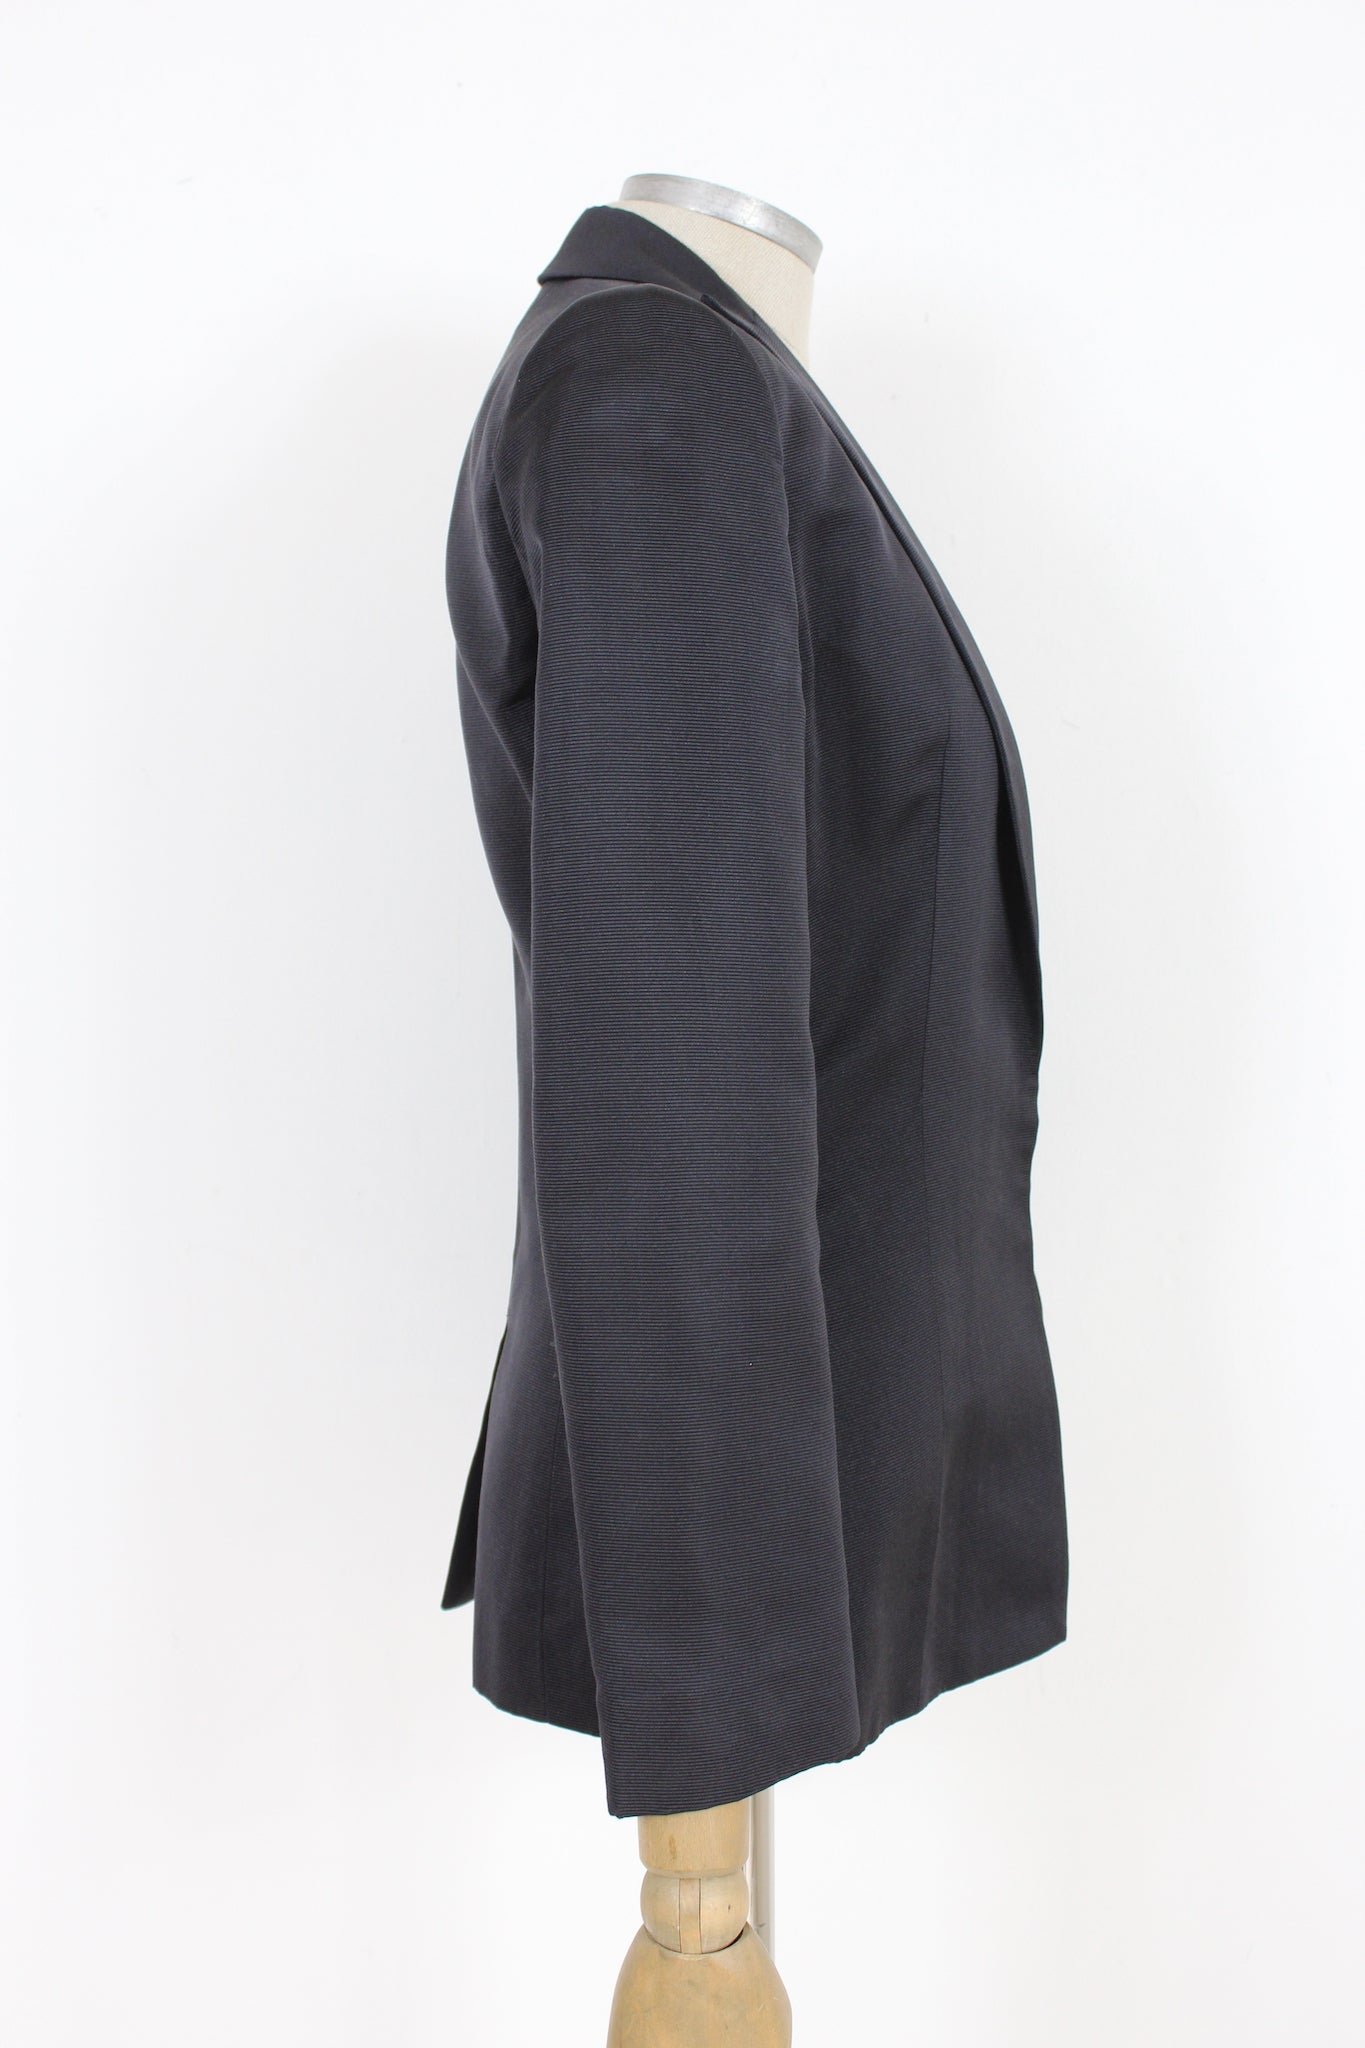 Valentino Glossy Black Slim Fit Vintage Jacket 1990s